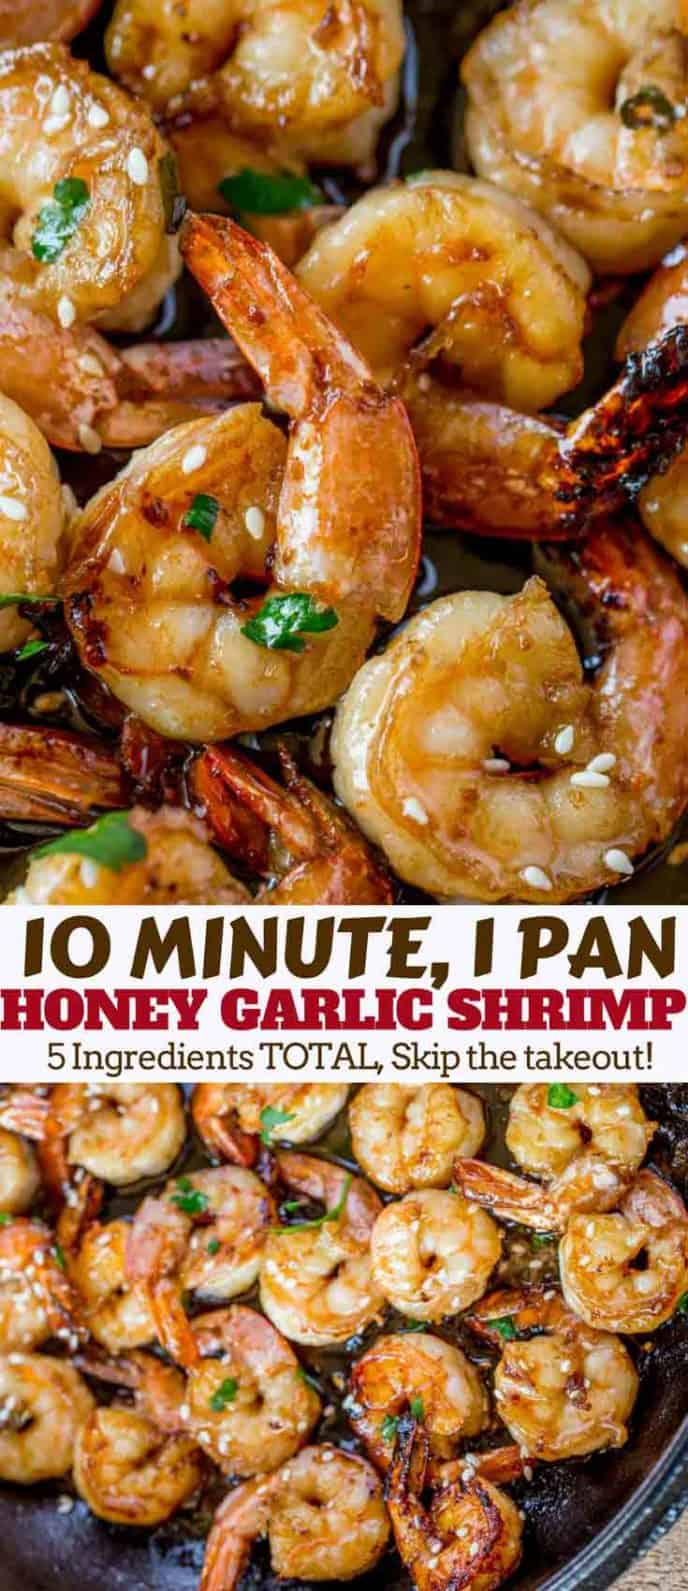 Honey Garlic Shrimp